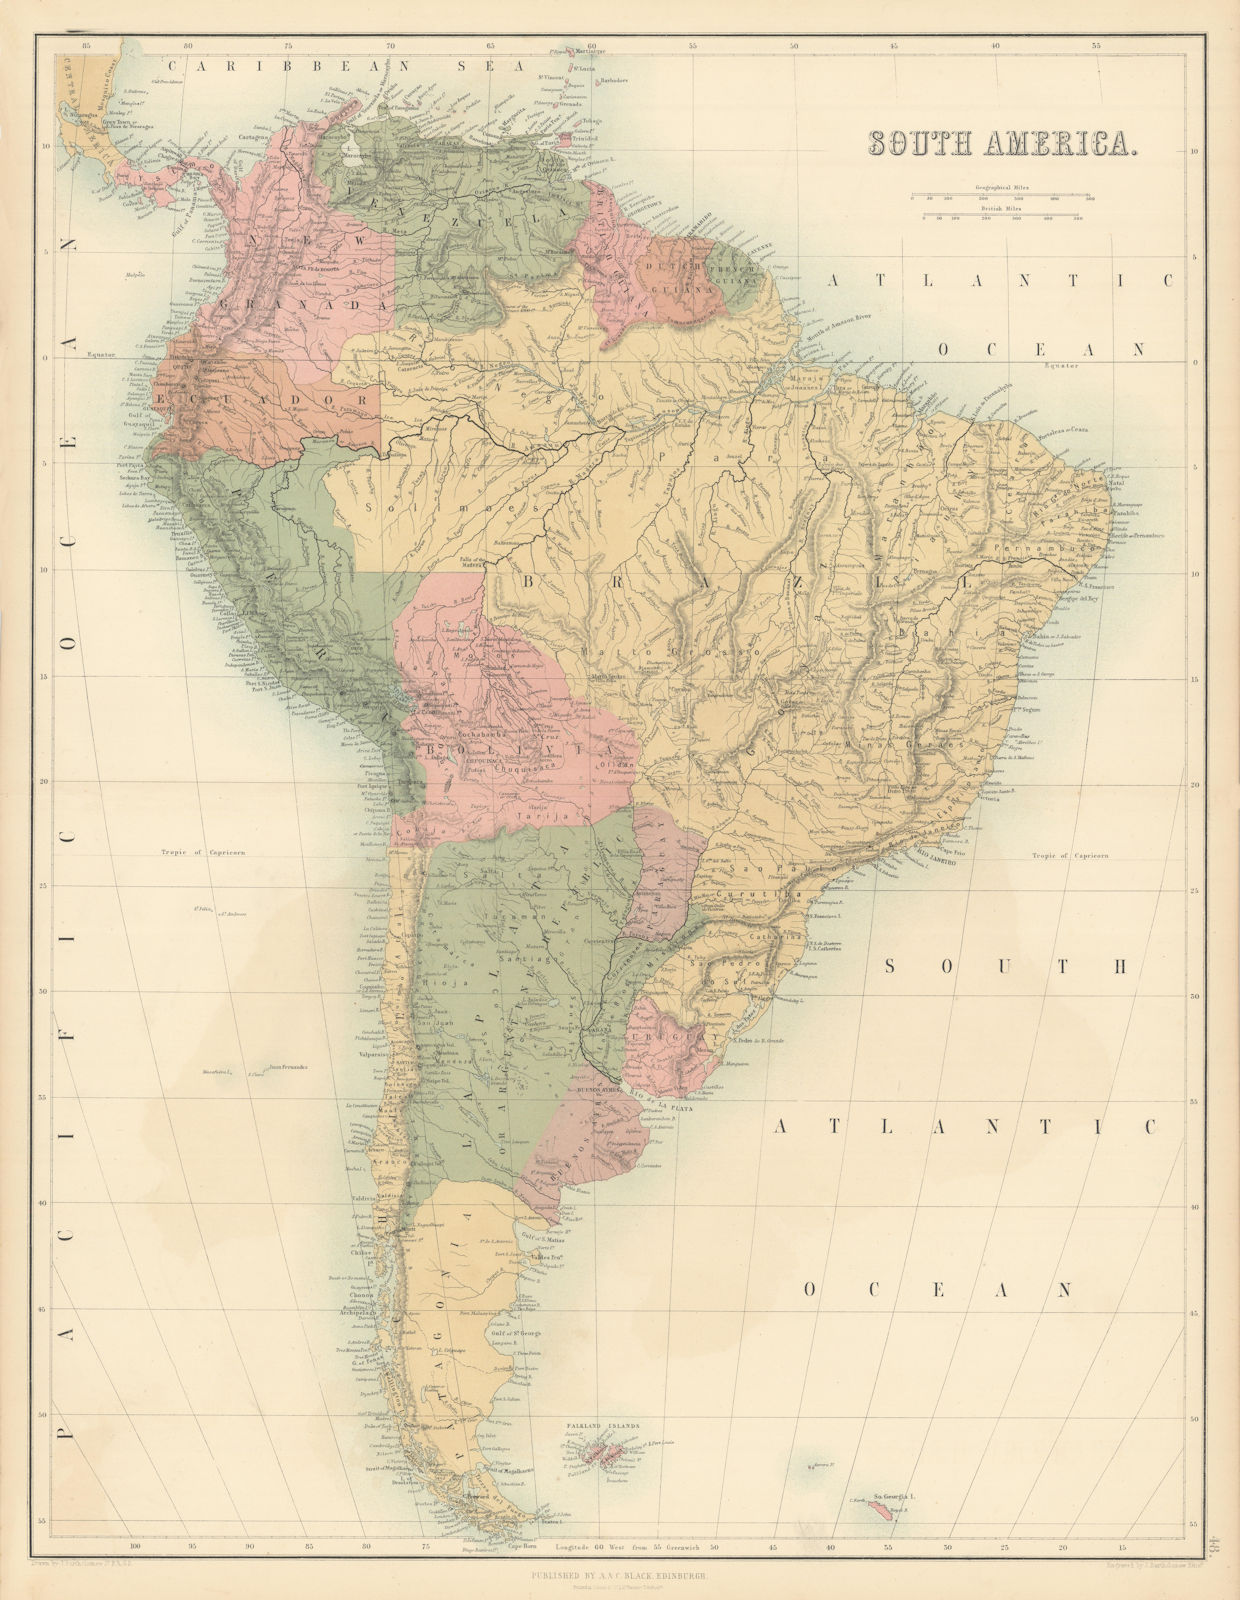 South America. Bolivia w/ Litoral pre War of the Pacific. BARTHOLOMEW 1862 map